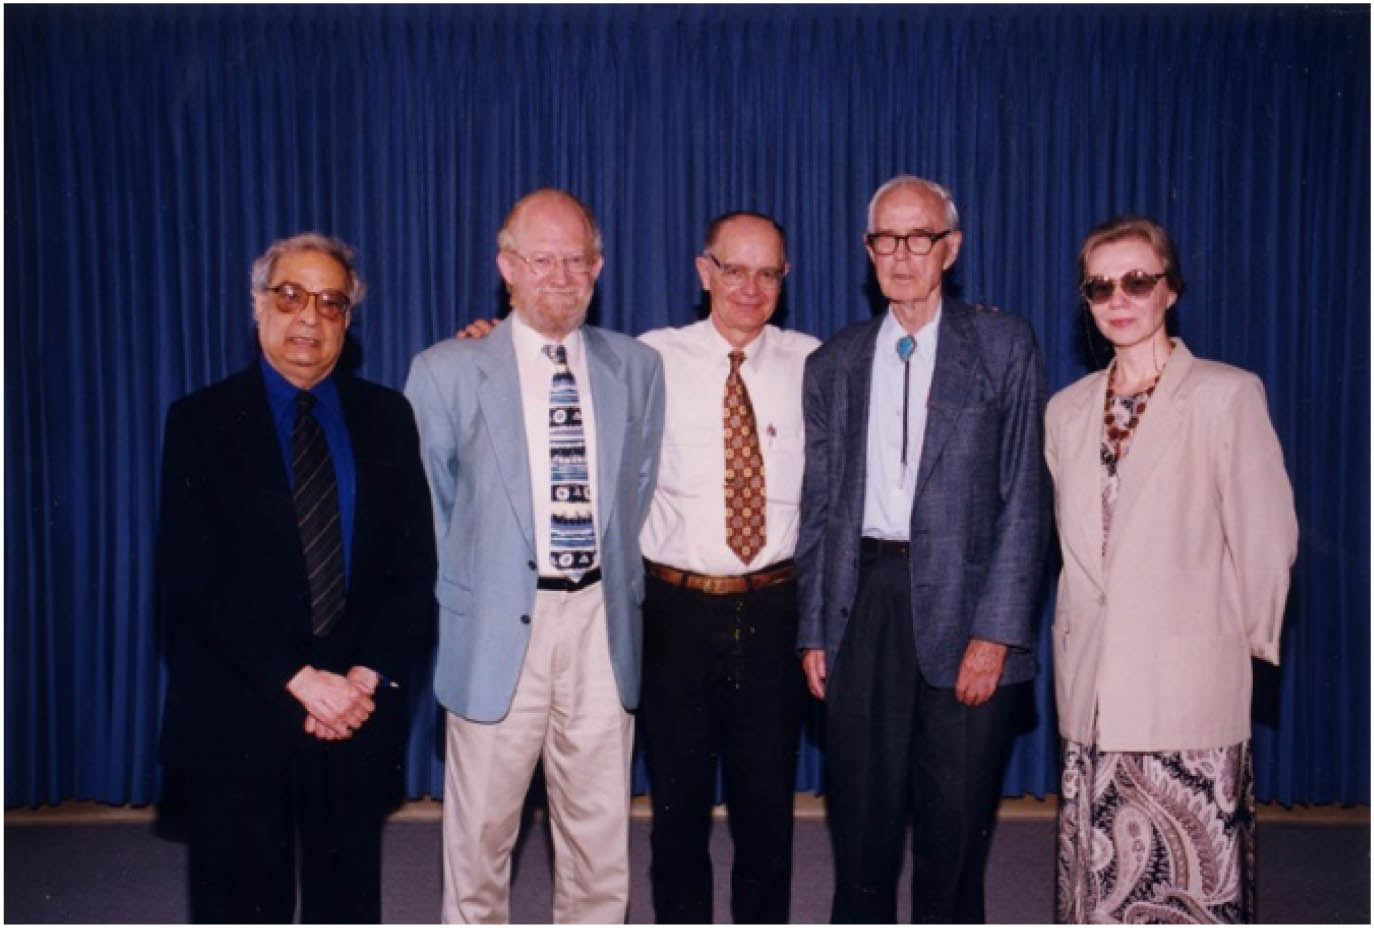 Left to right: Ali Javan, Paul Mandel, Marlan Scully, Willis Lamb, and Olga Kocharovskaya (provided by Marlan Scully).